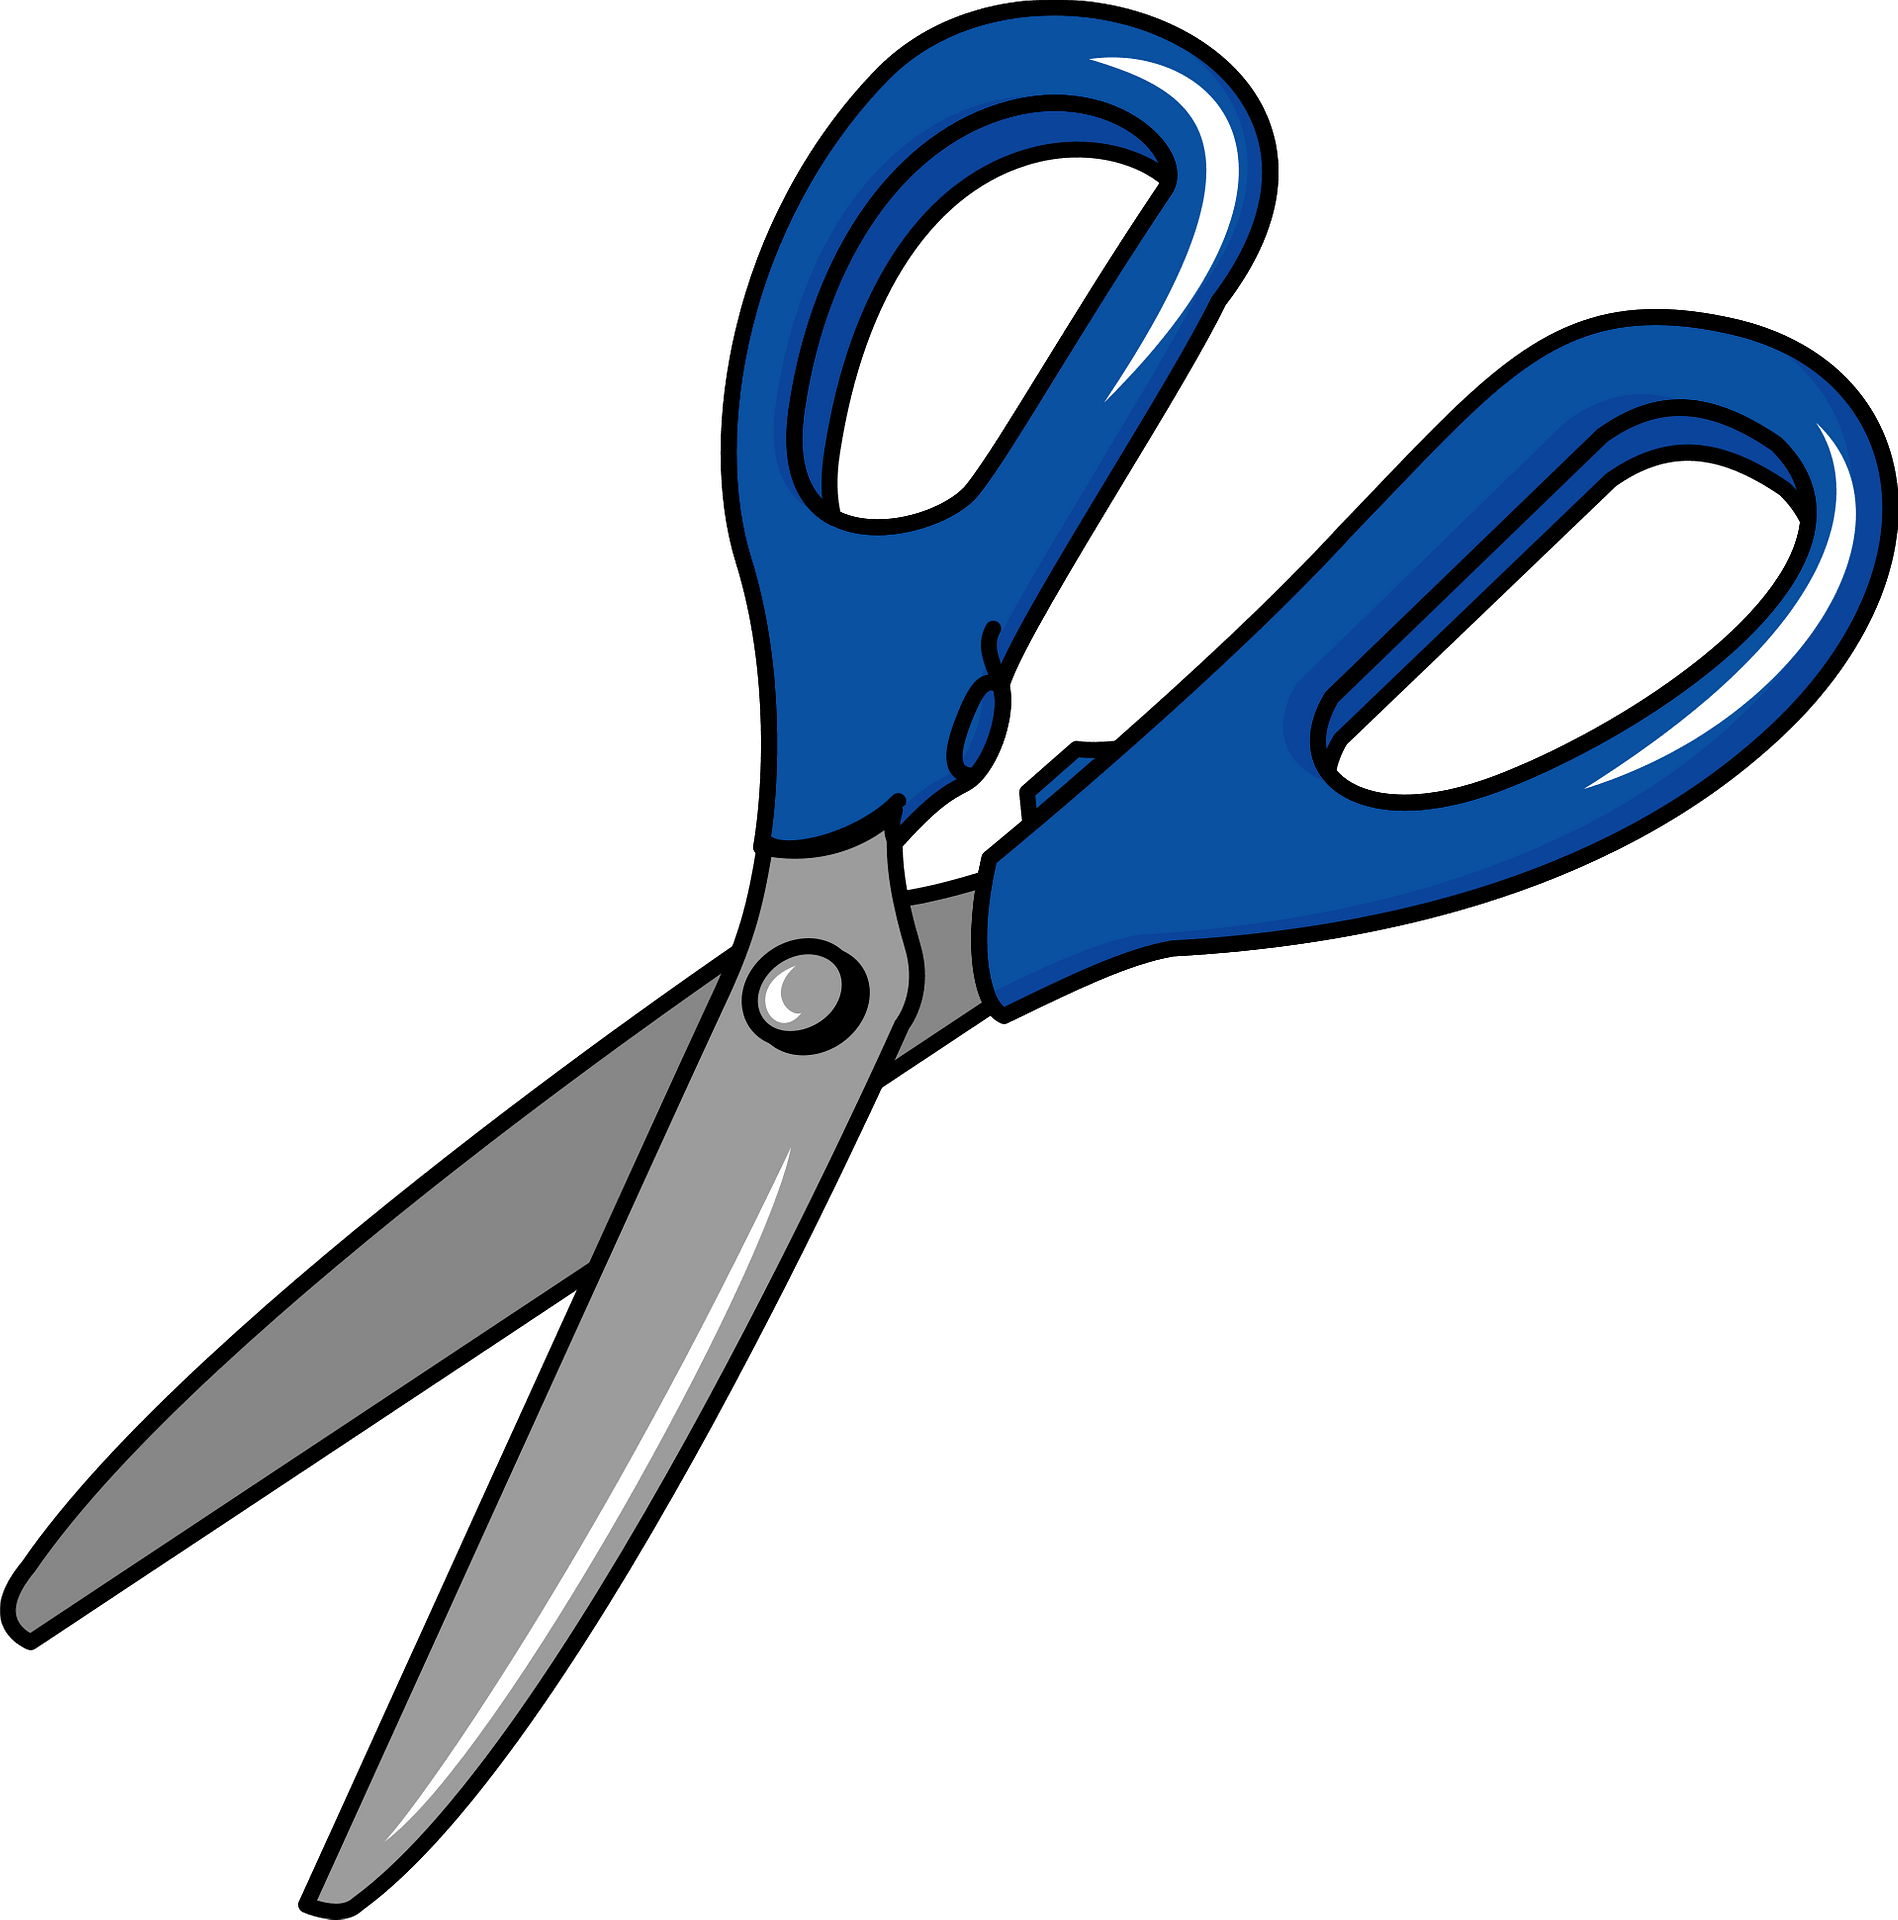 Free scissors art, Download Free scissors art png images, Free ClipArts ...